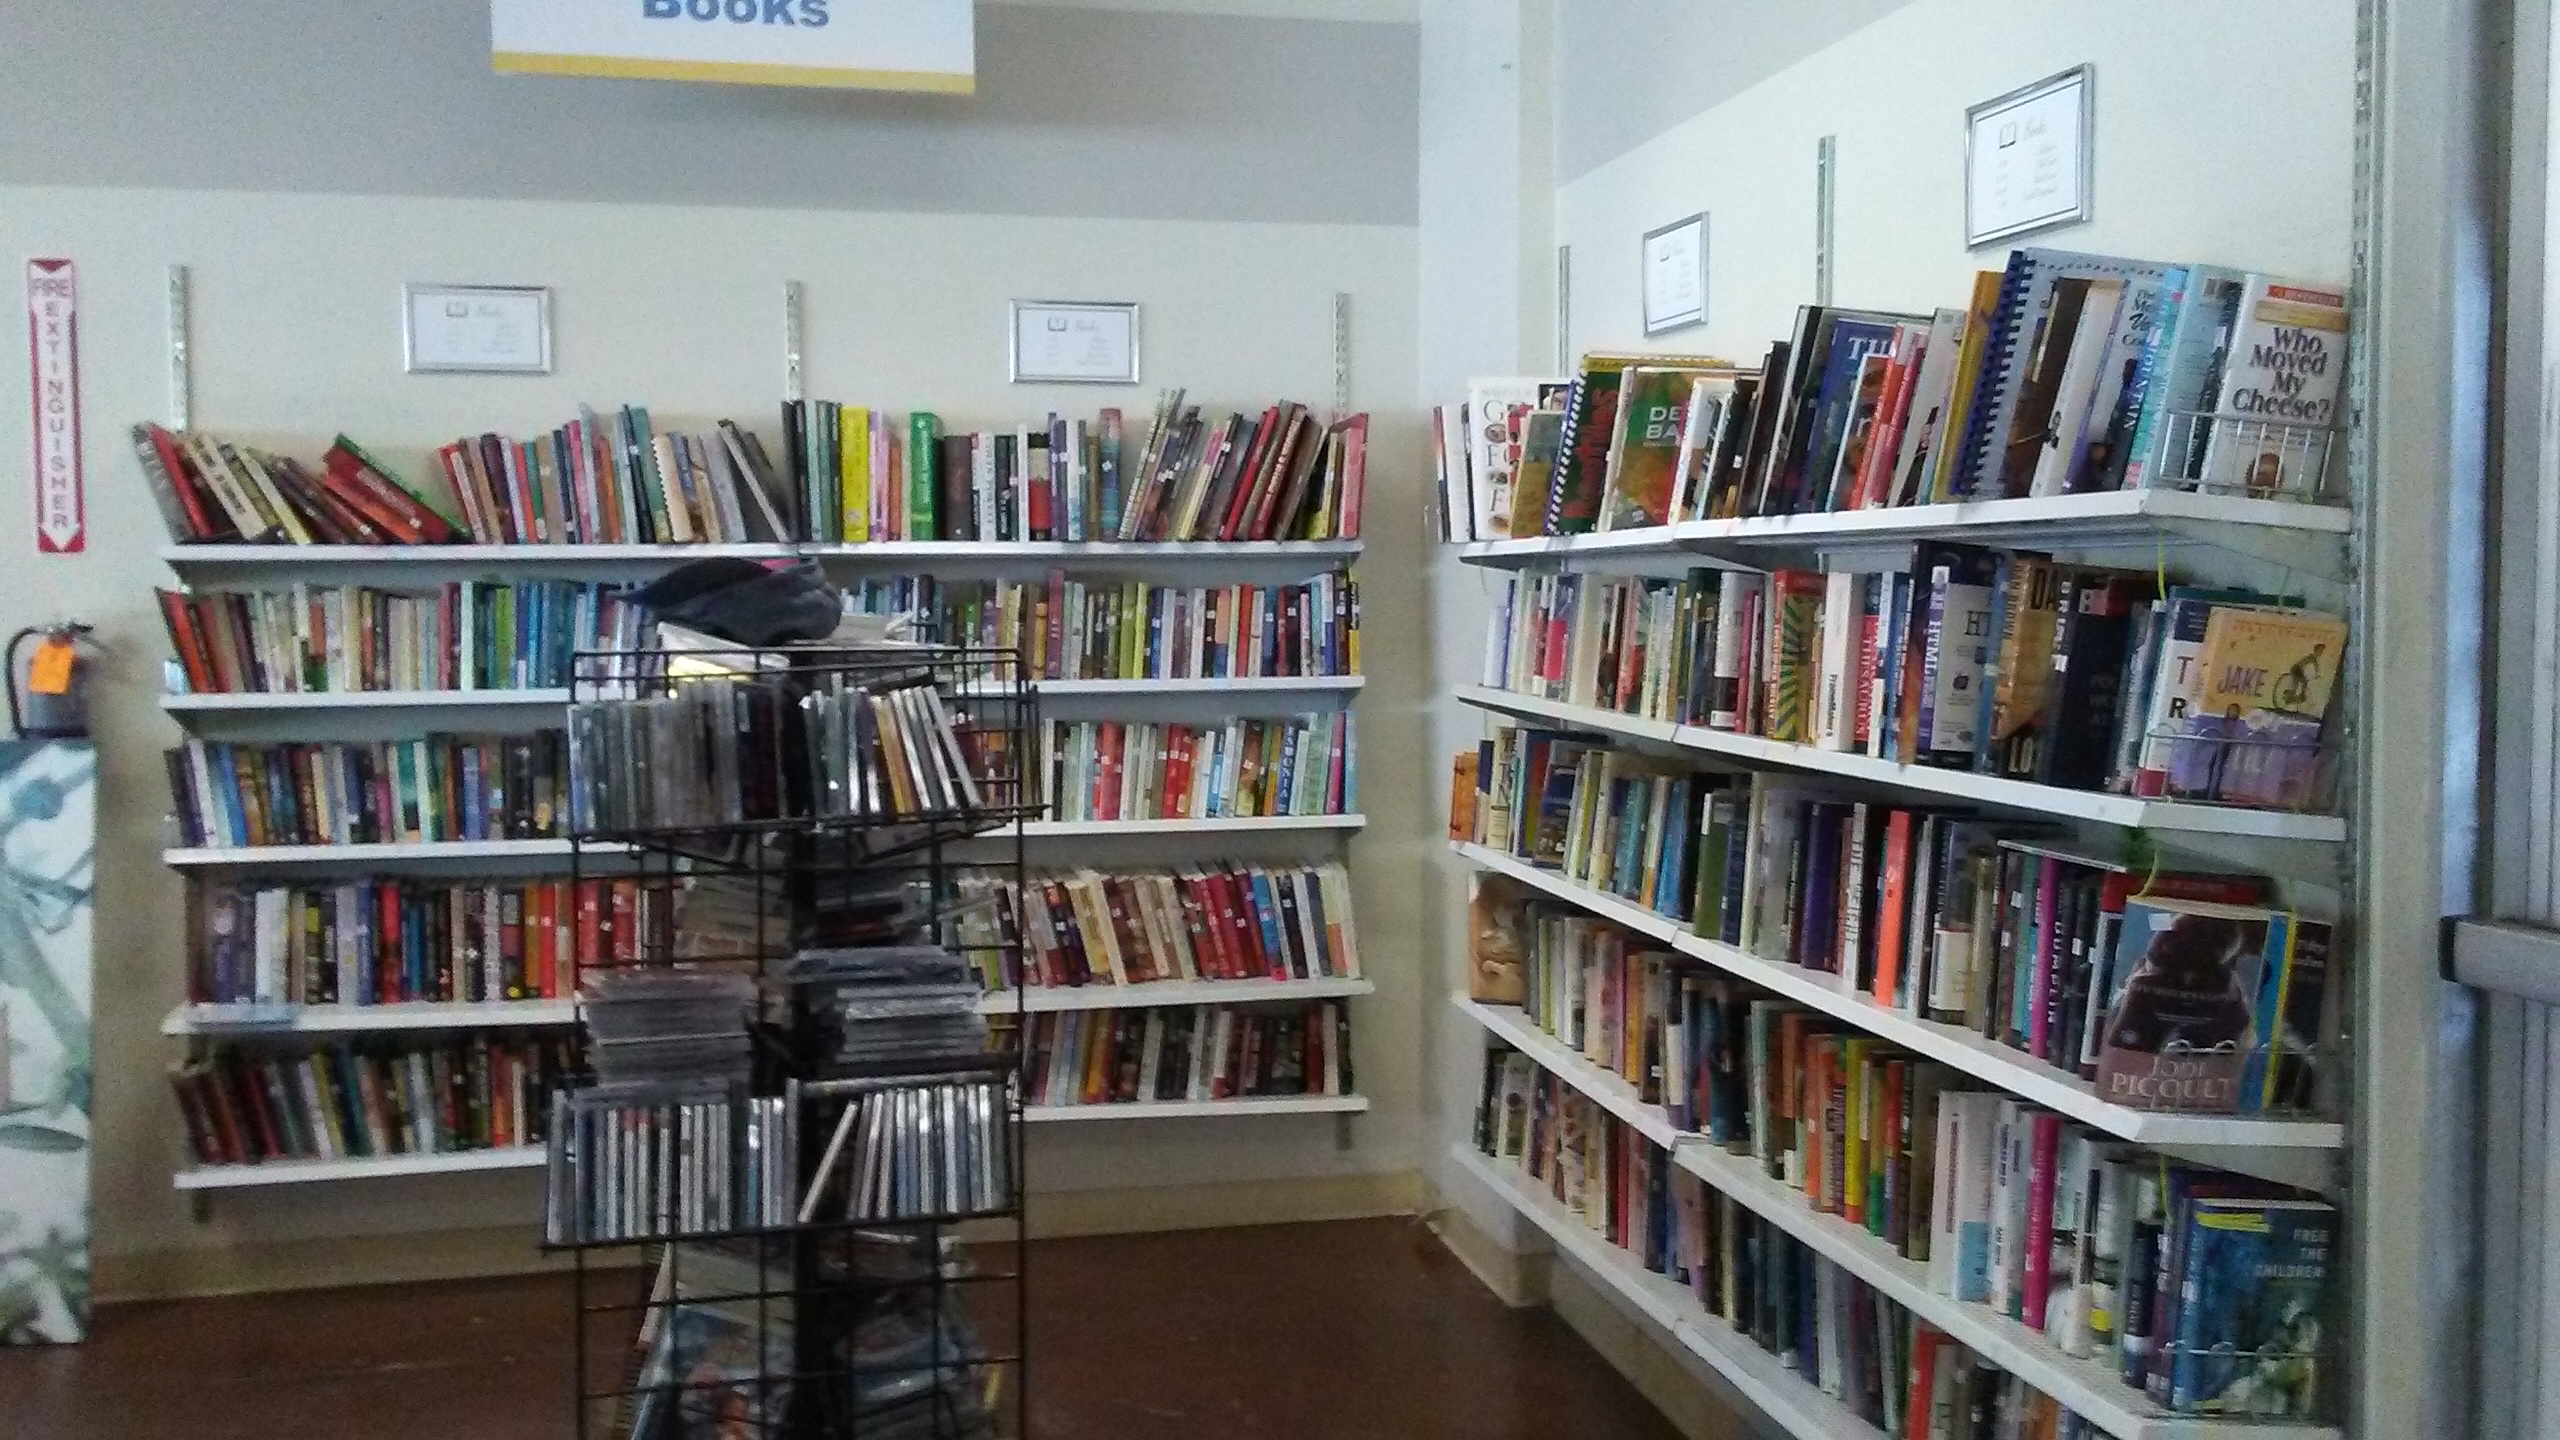 Books Goodwill book corner